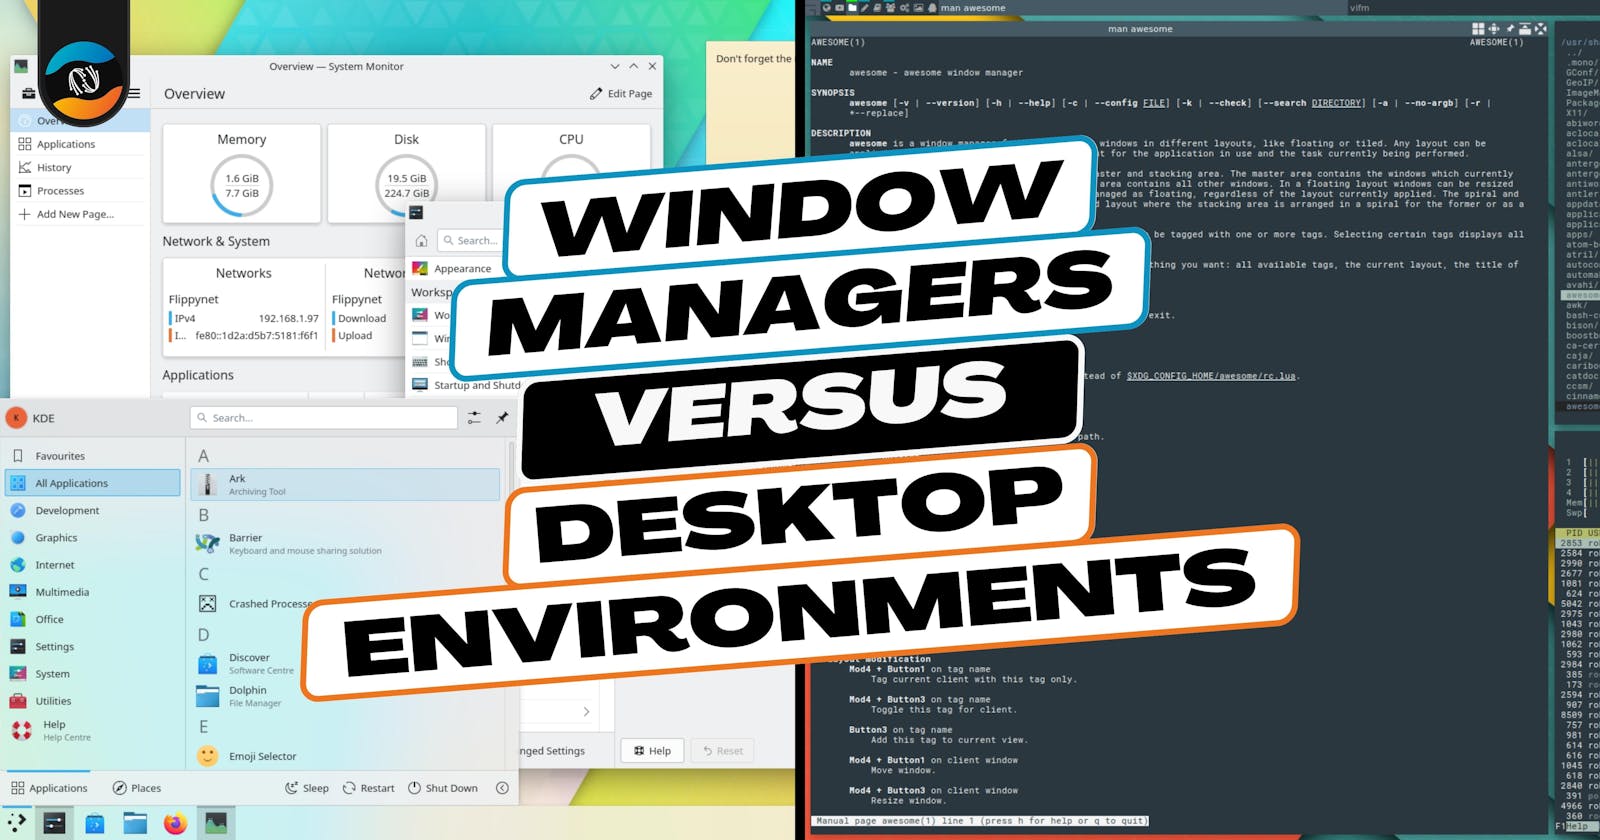 Customizing Your Linux Desktop: Window Managers vs Desktop Environments